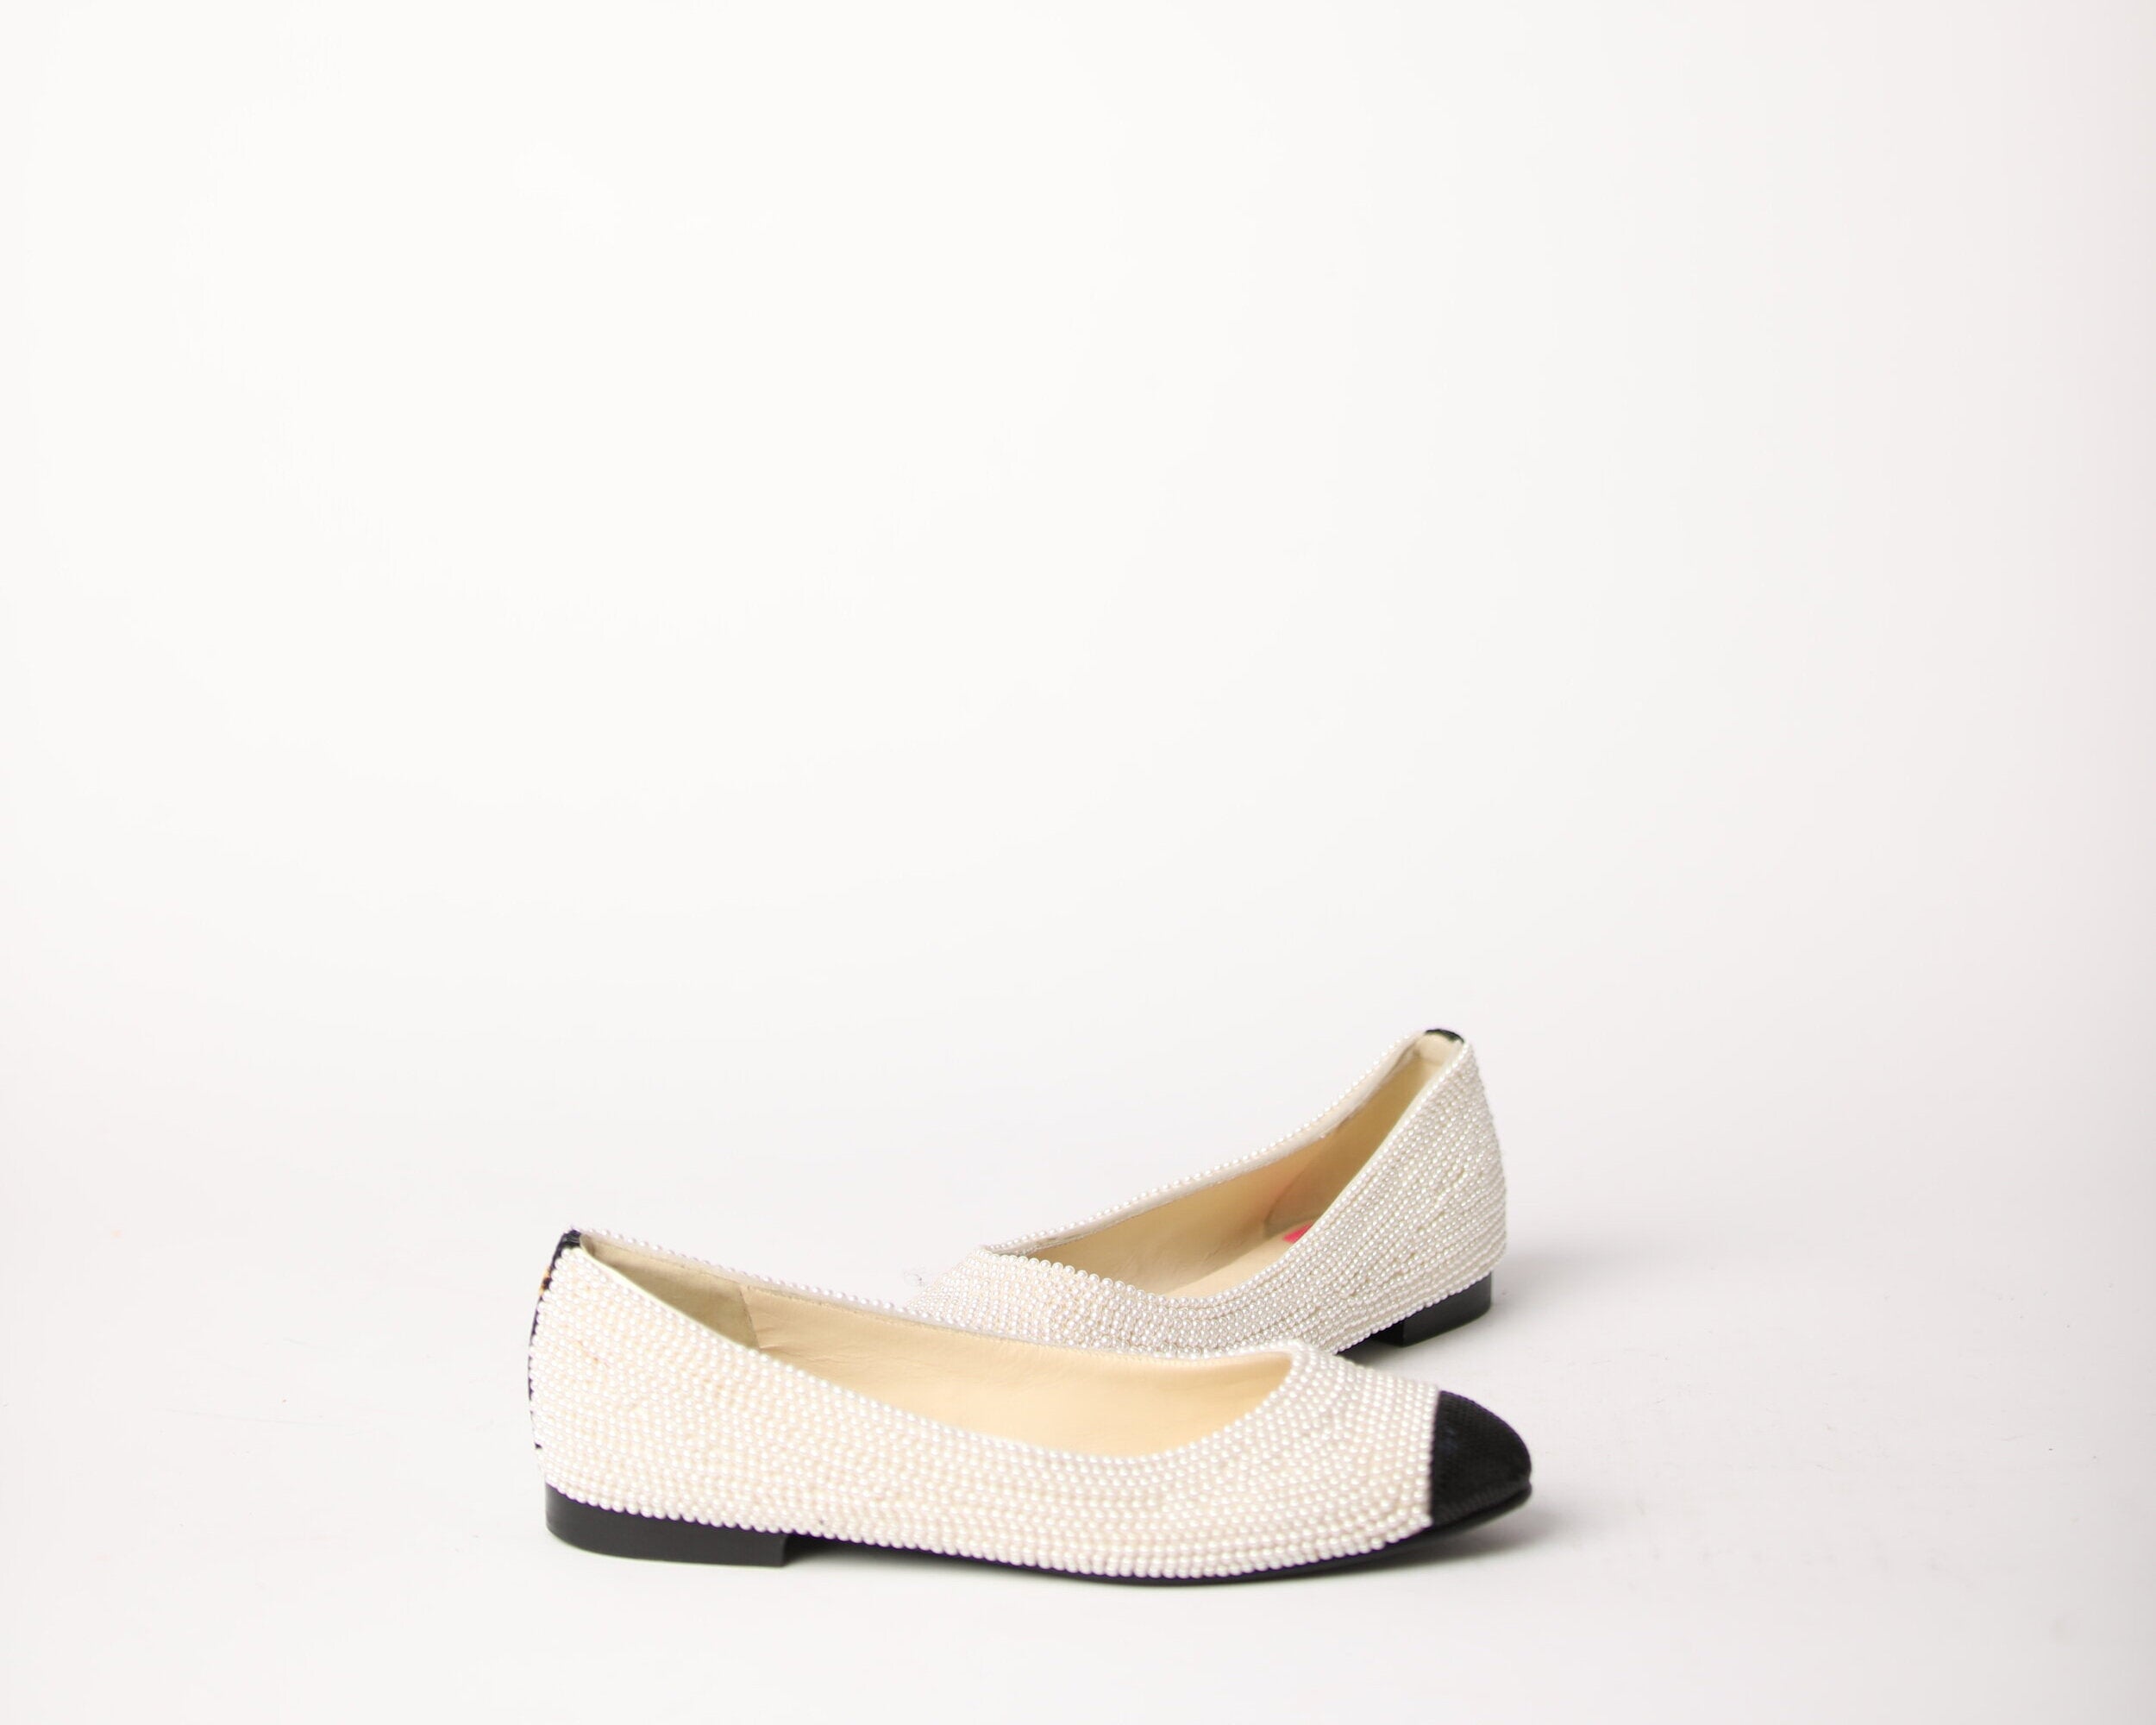 Chanel espadrilles woman flats shoes sequined white color